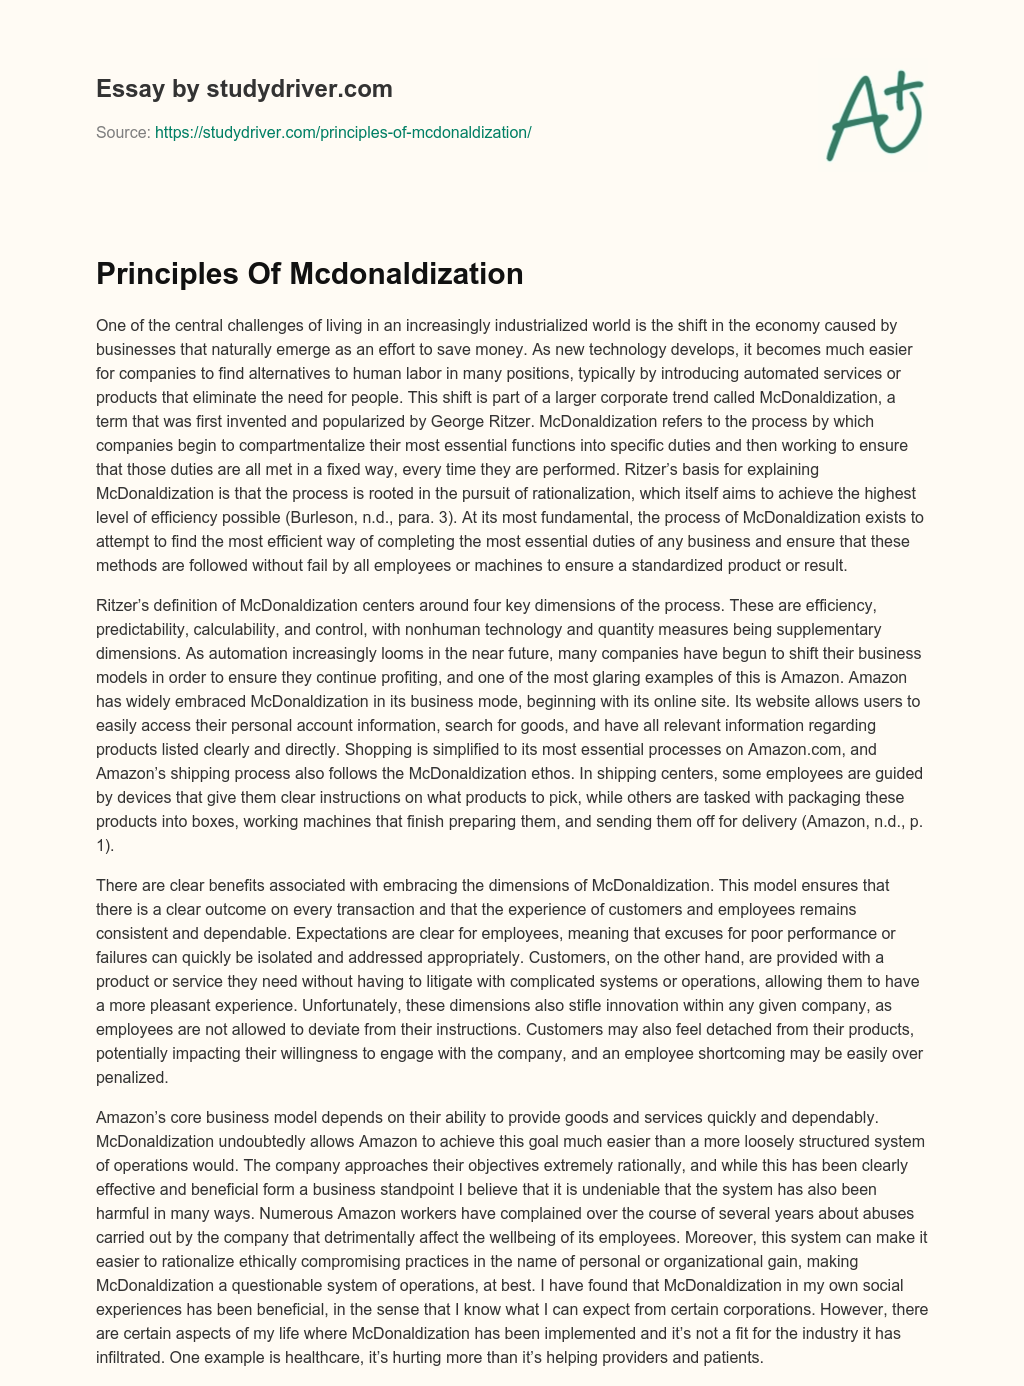 Principles of Mcdonaldization essay